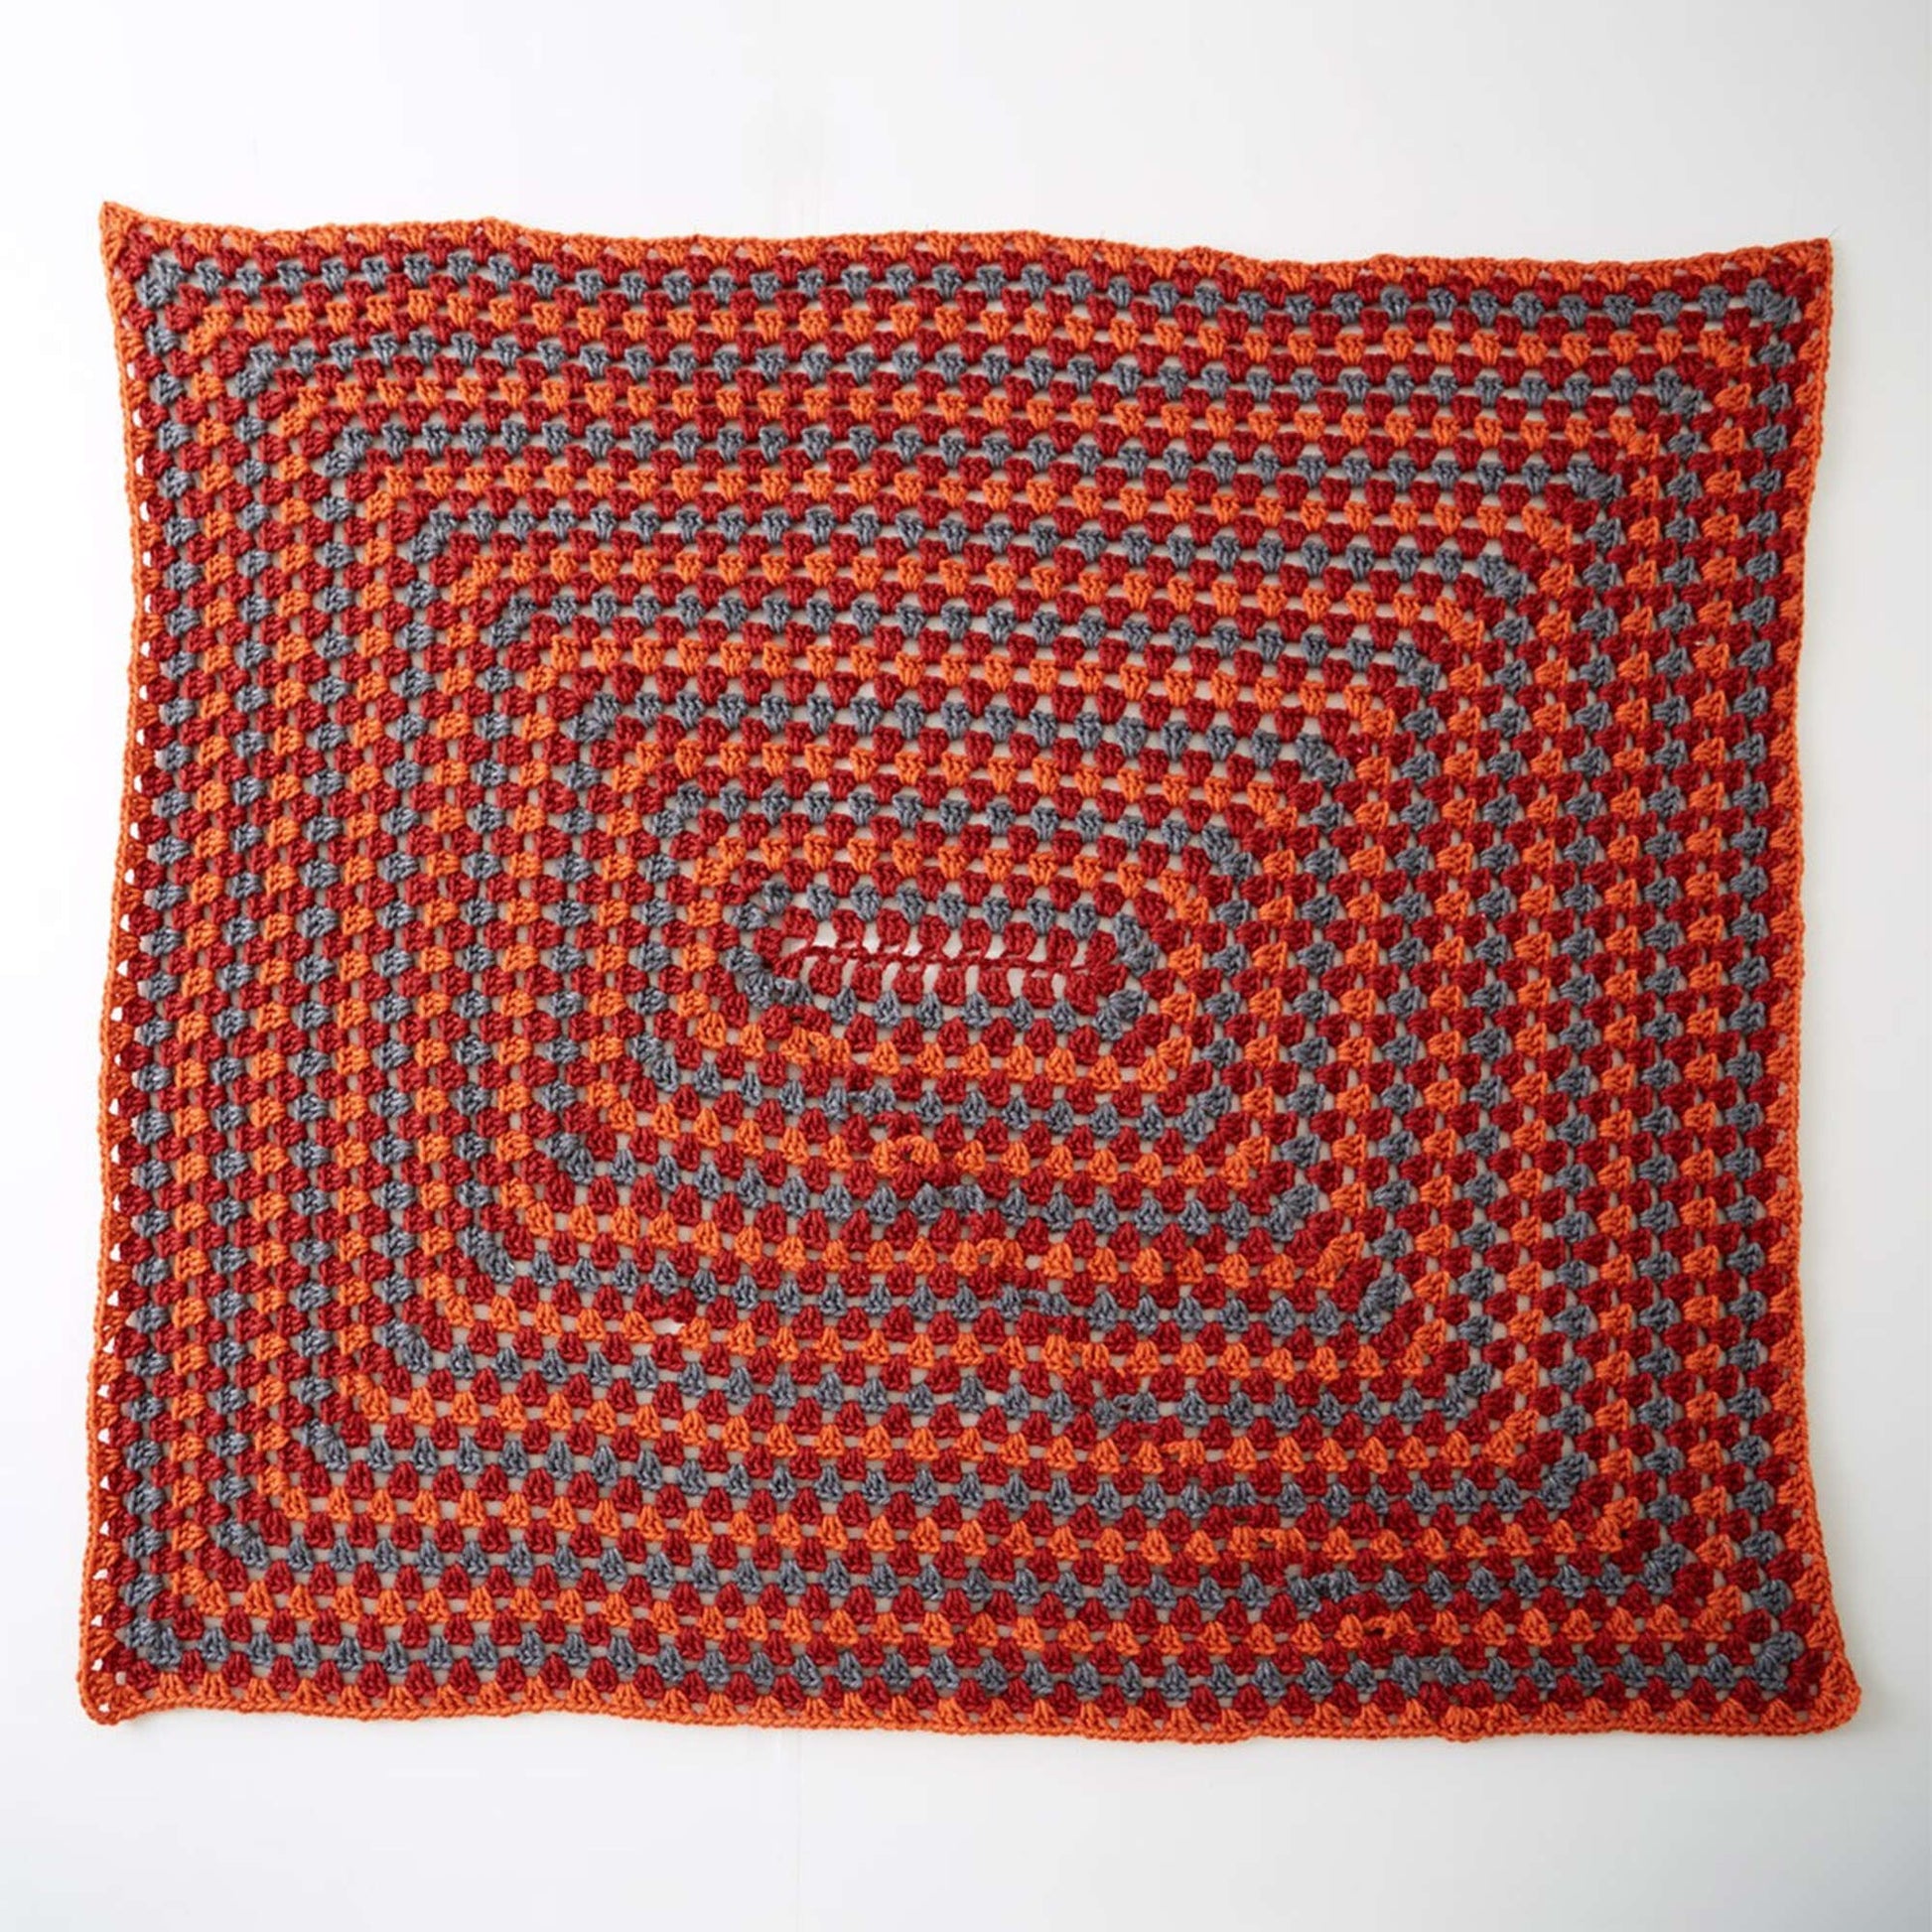 Bernat Rectangle Granny Afghan Crochet Blanket made in Bernat Softee Chunky yarn